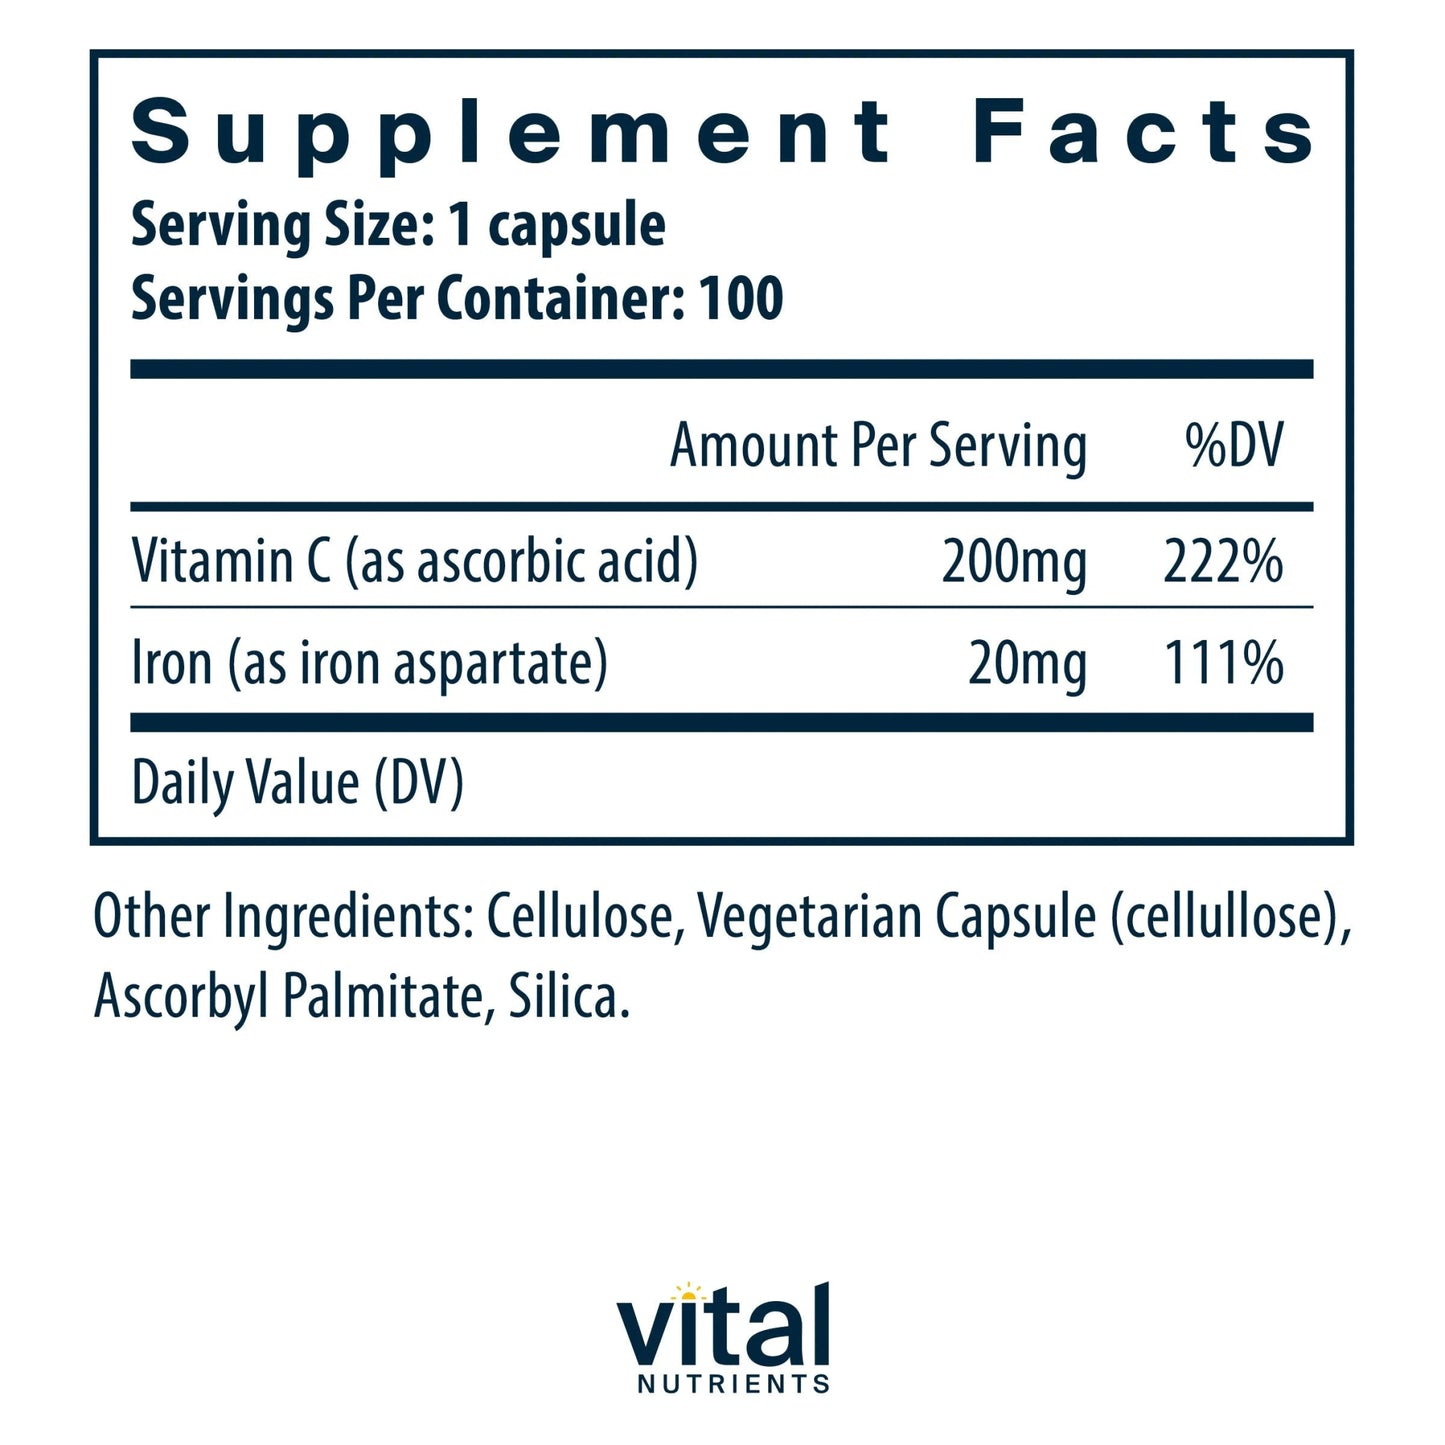 Iron Plus C 20mg/200mg (Vital Nutrition) - HAPIVERI